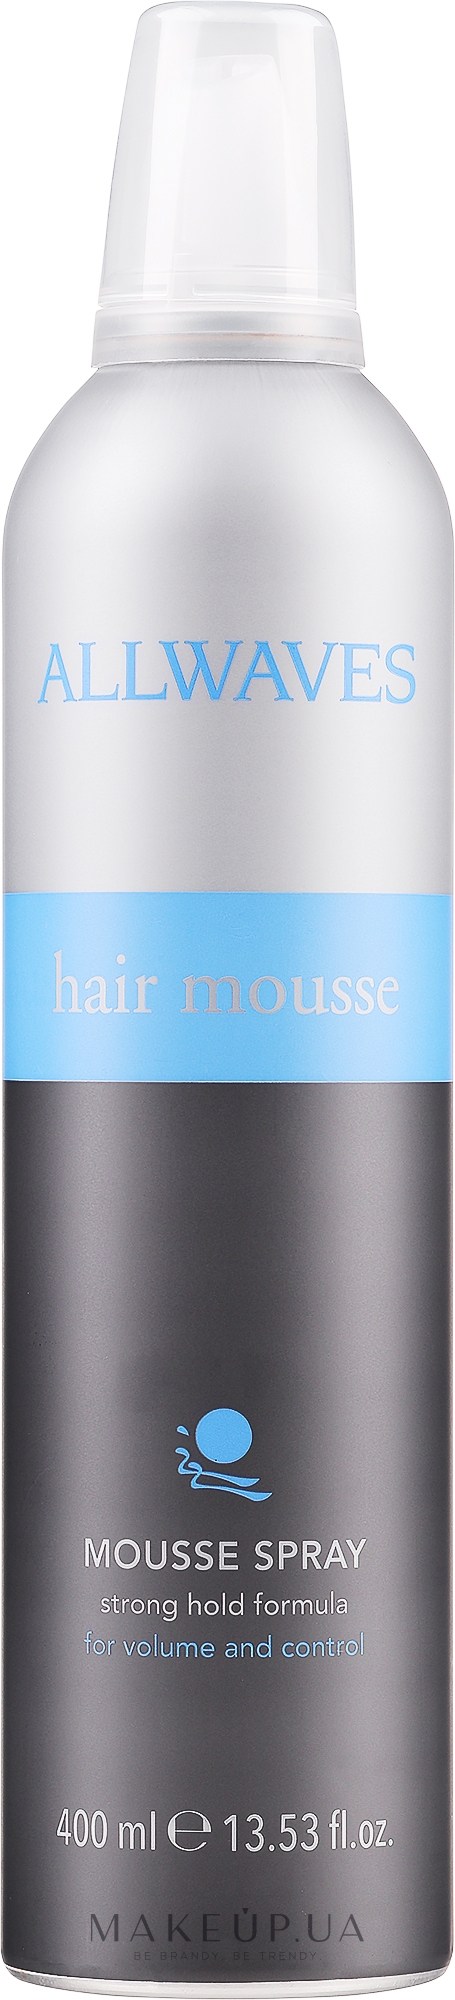 Пінка для укладання волосся - Allwaves Hair Mousse Spray — фото 400ml